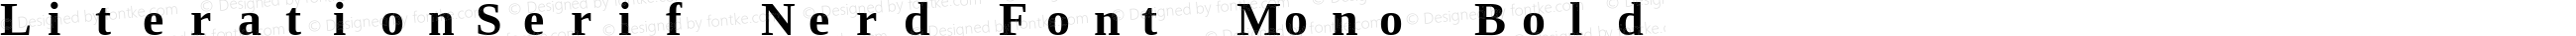 Literation Serif Bold Nerd Font Complete Mono